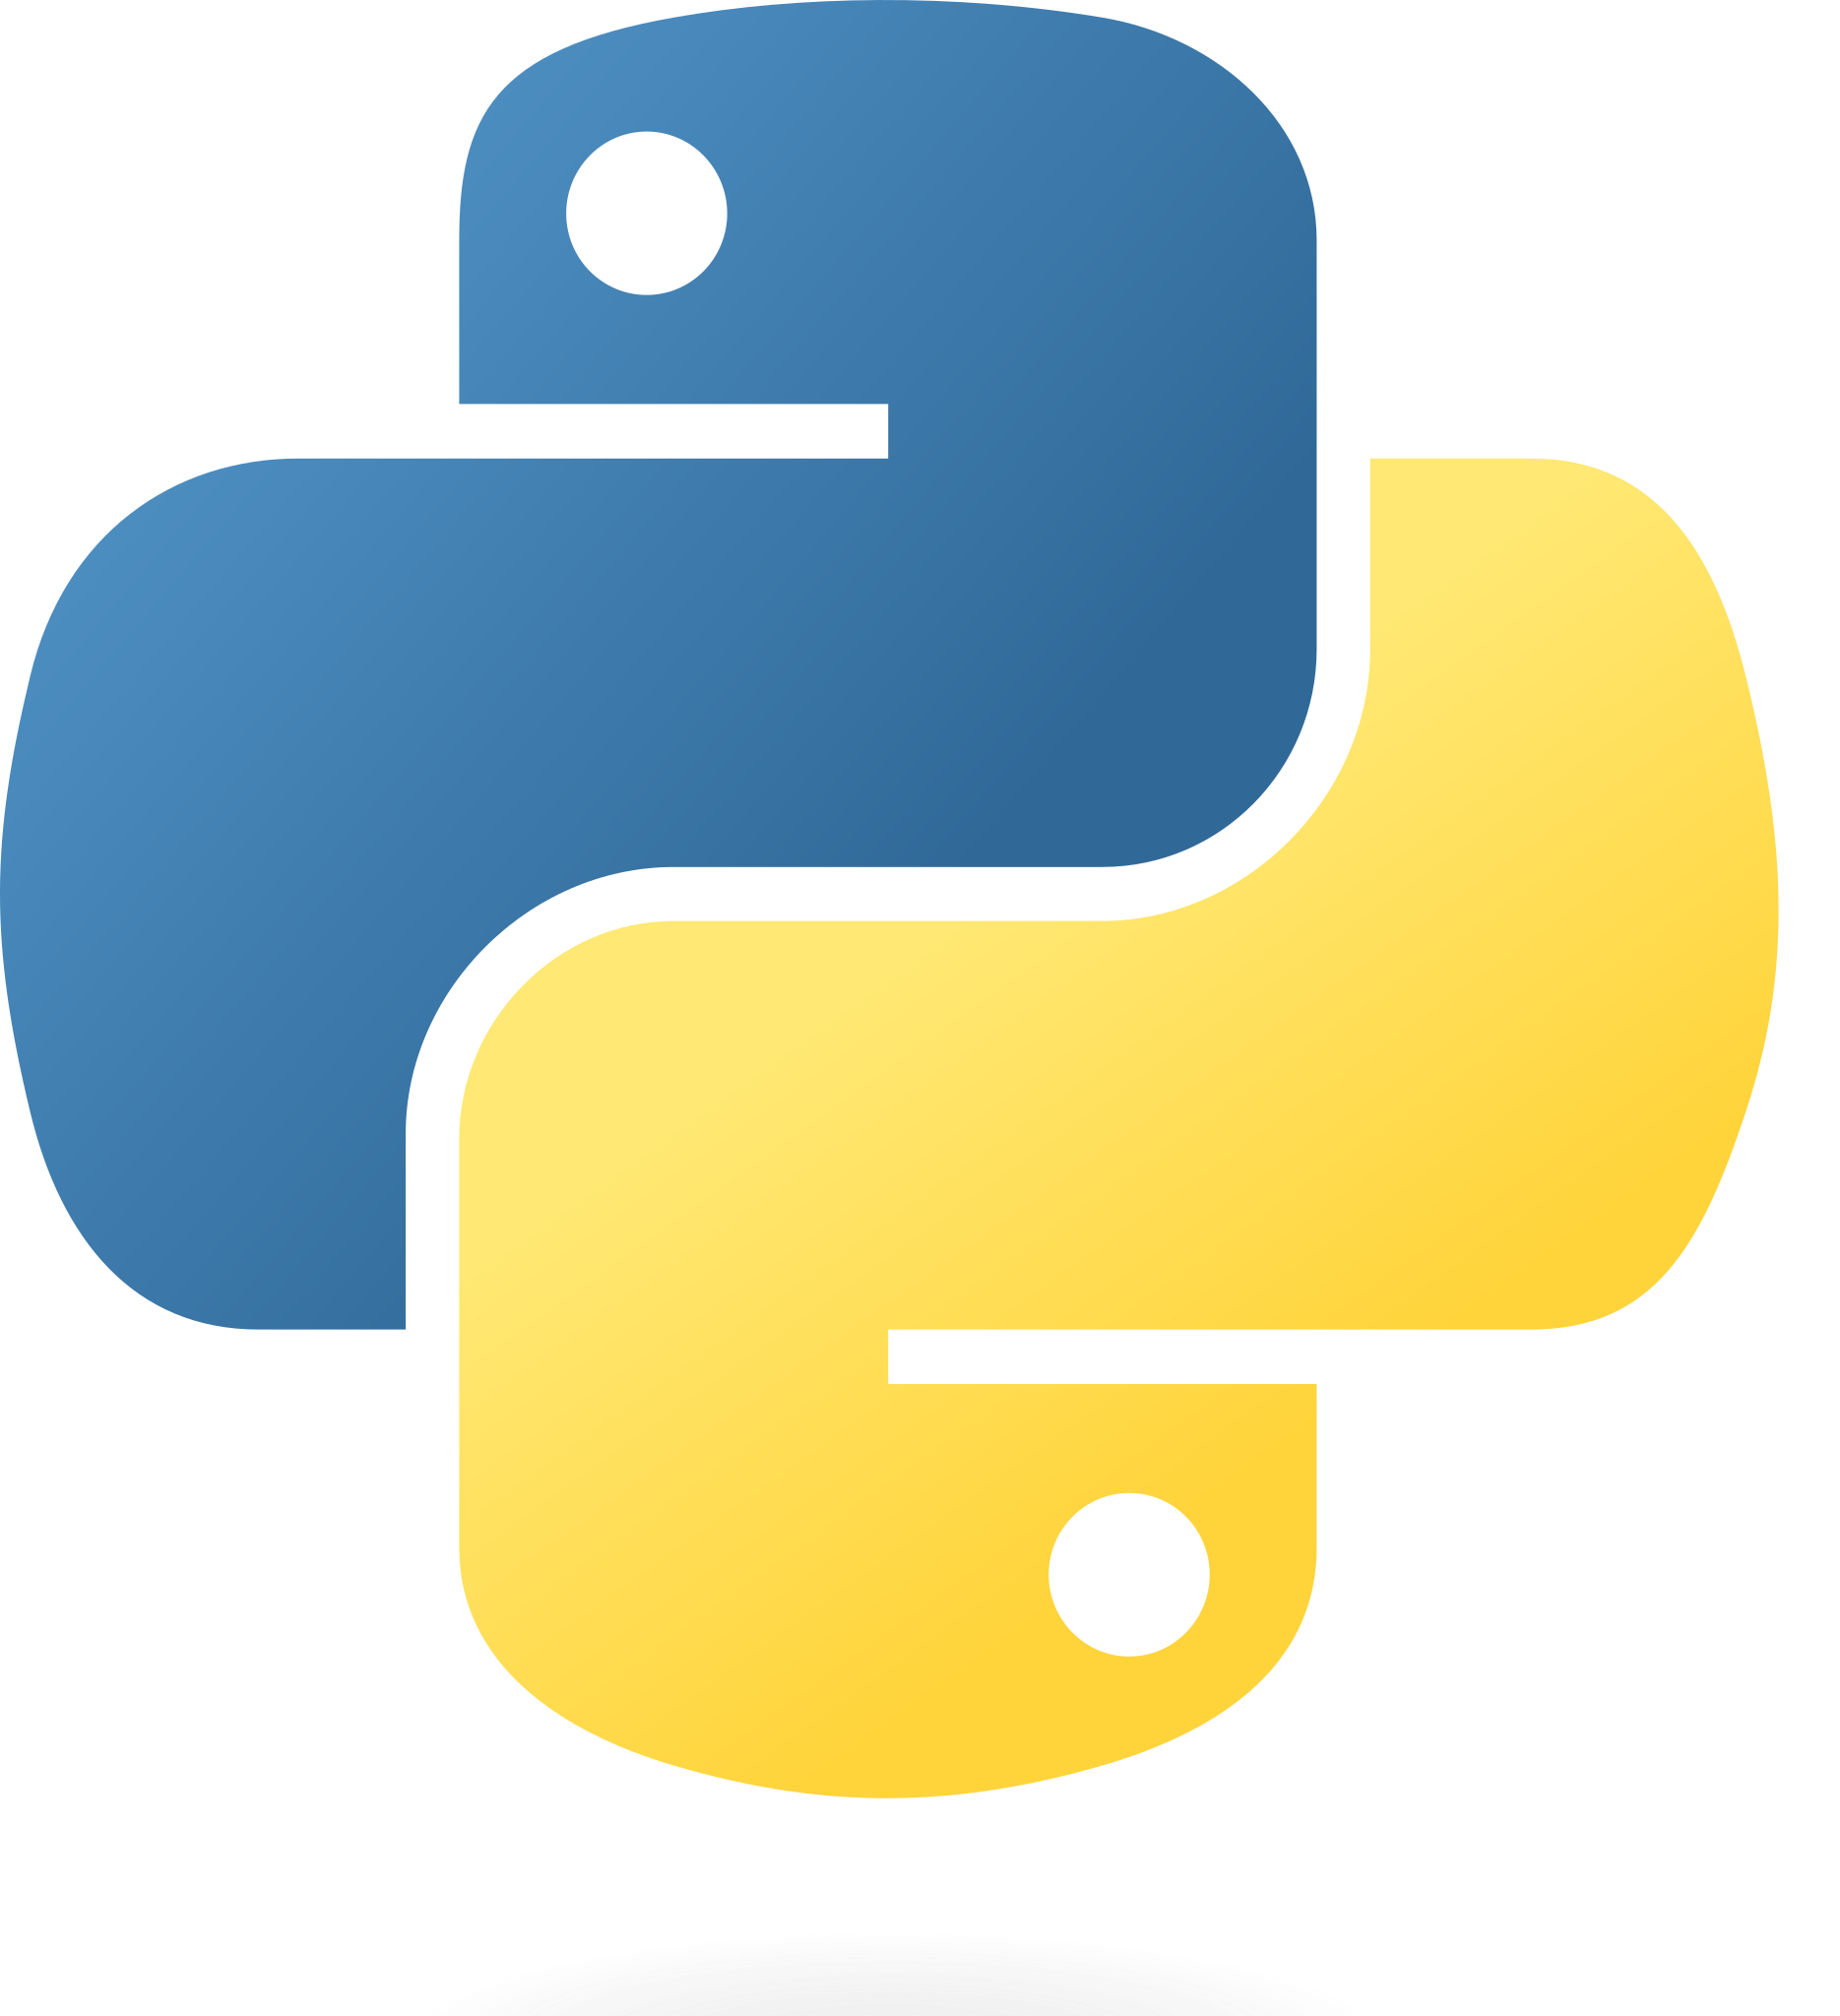 Python Logo for Blockchain Development